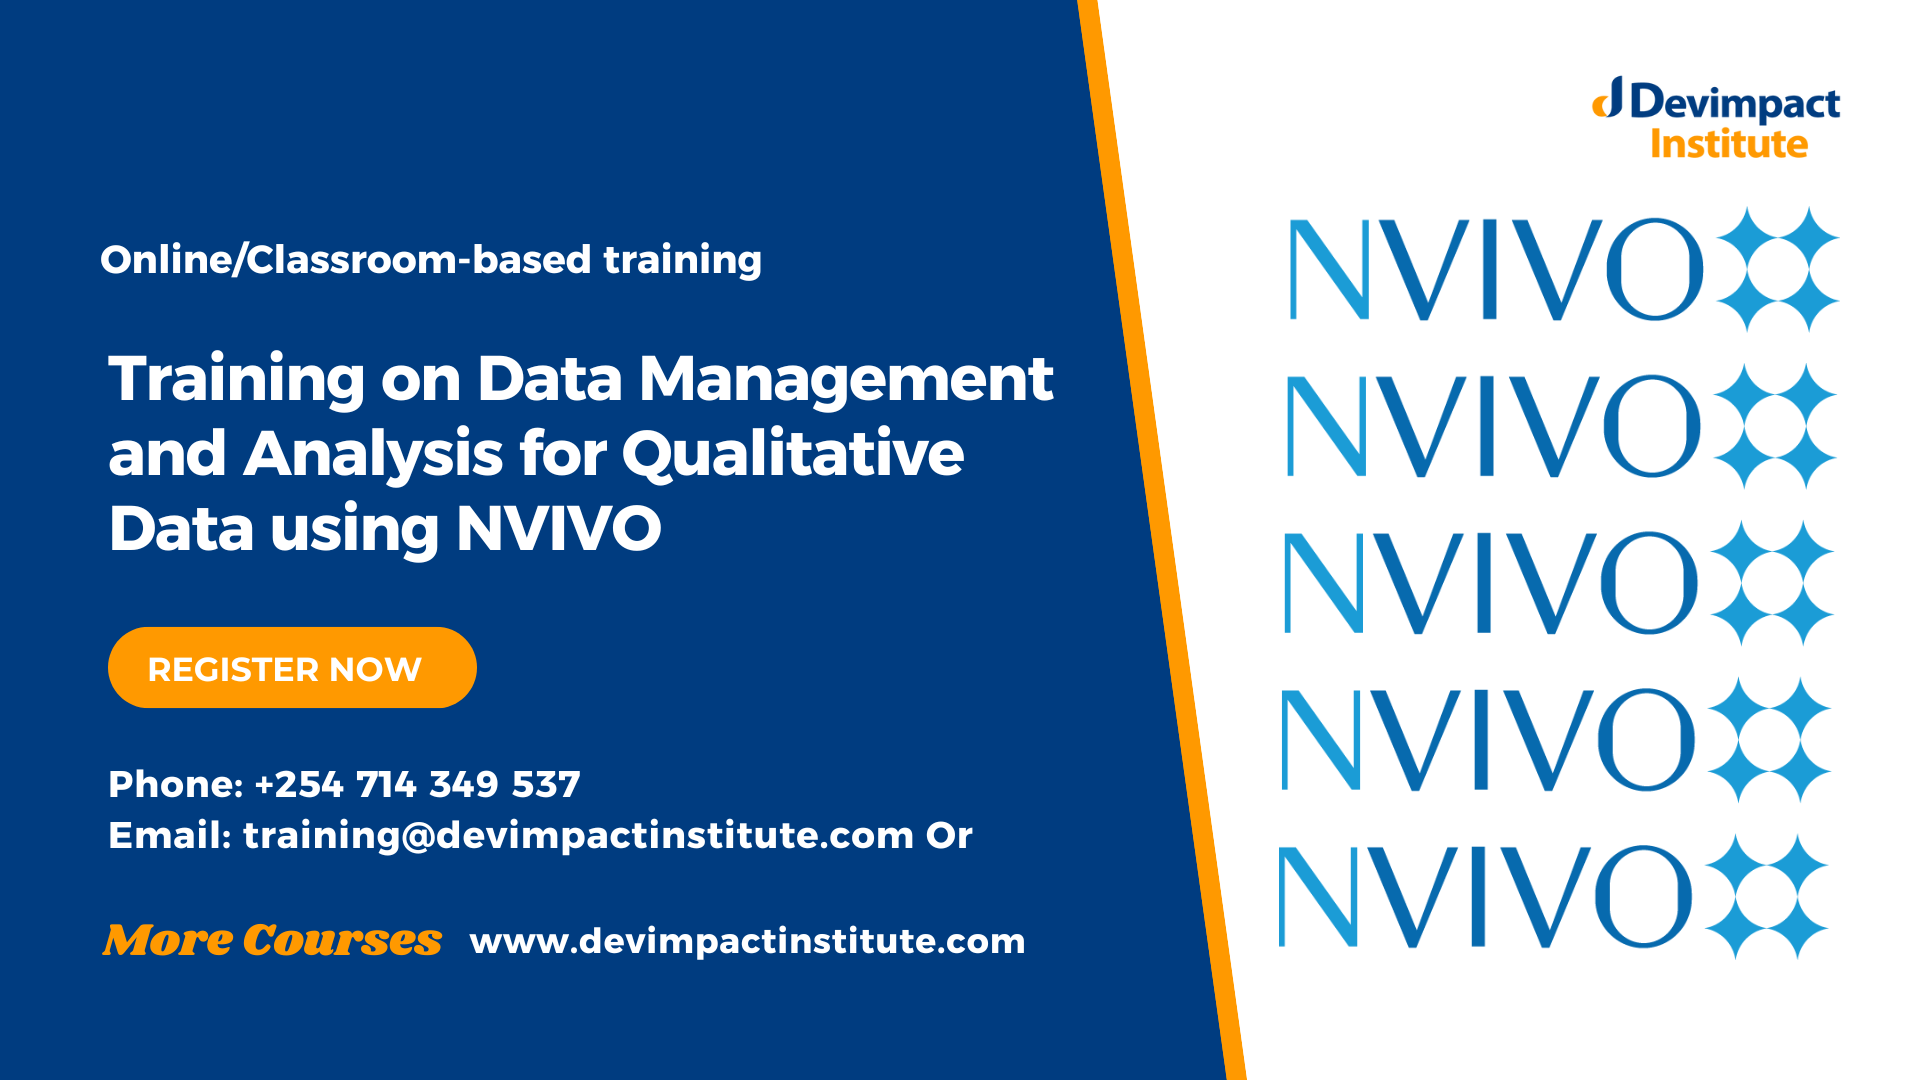 Training on Data Management and Analysis for Qualitative Data using NVIVO, Devimpact Institute, Nairobi, Kenya